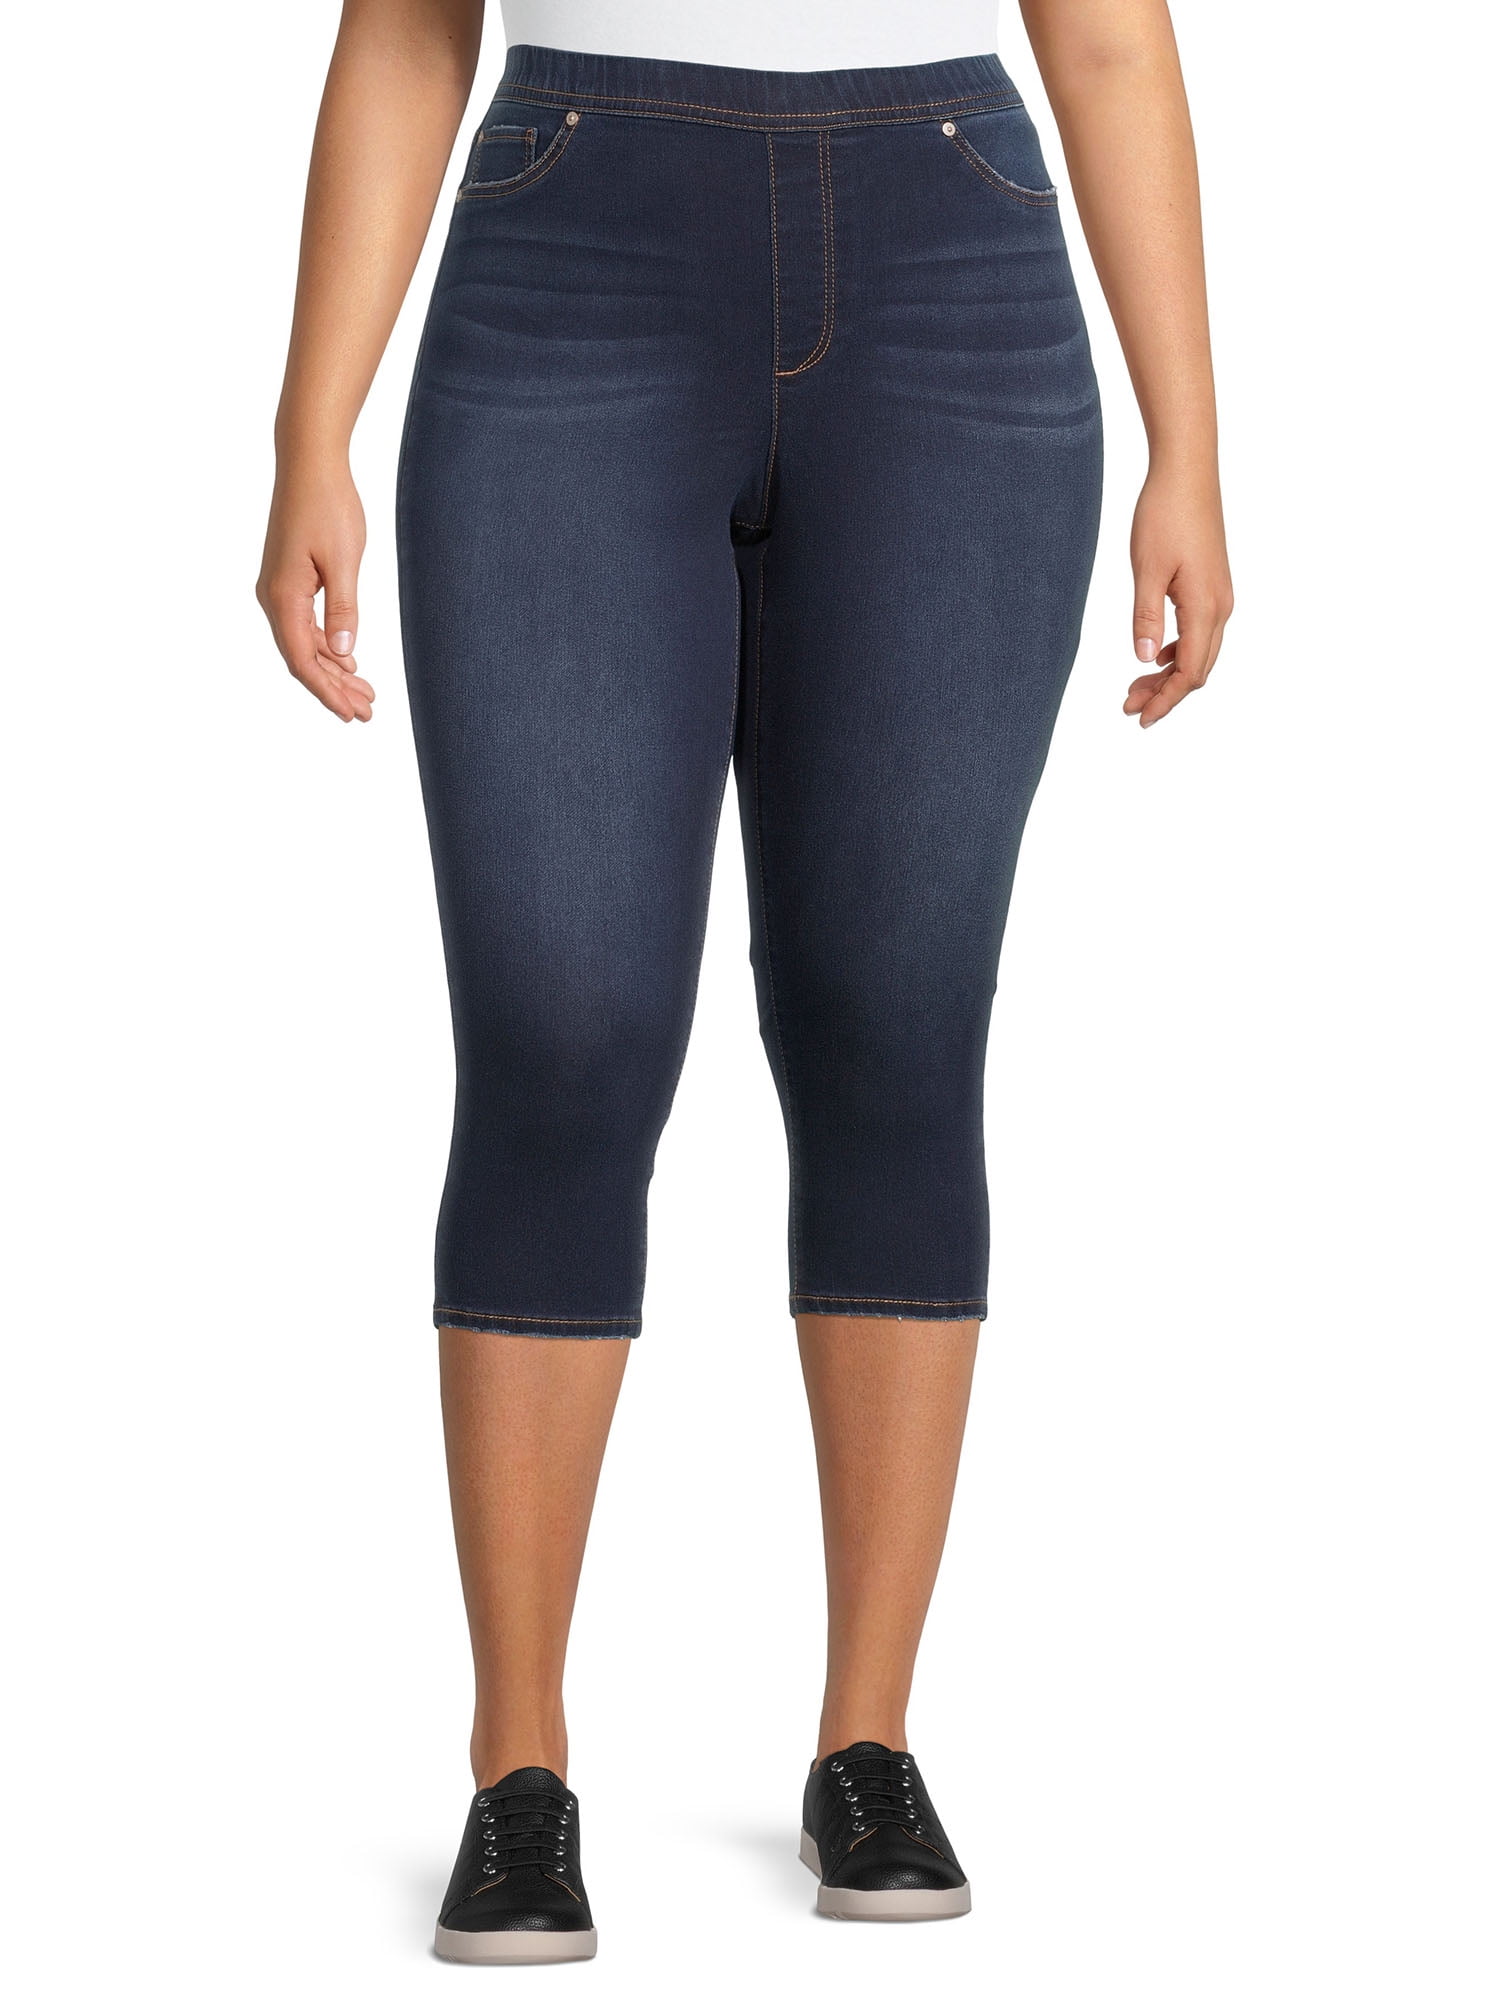 Terra & Sky Women's Plus Size Pull On Curvy Capri Pants Dark Wash Size 4X